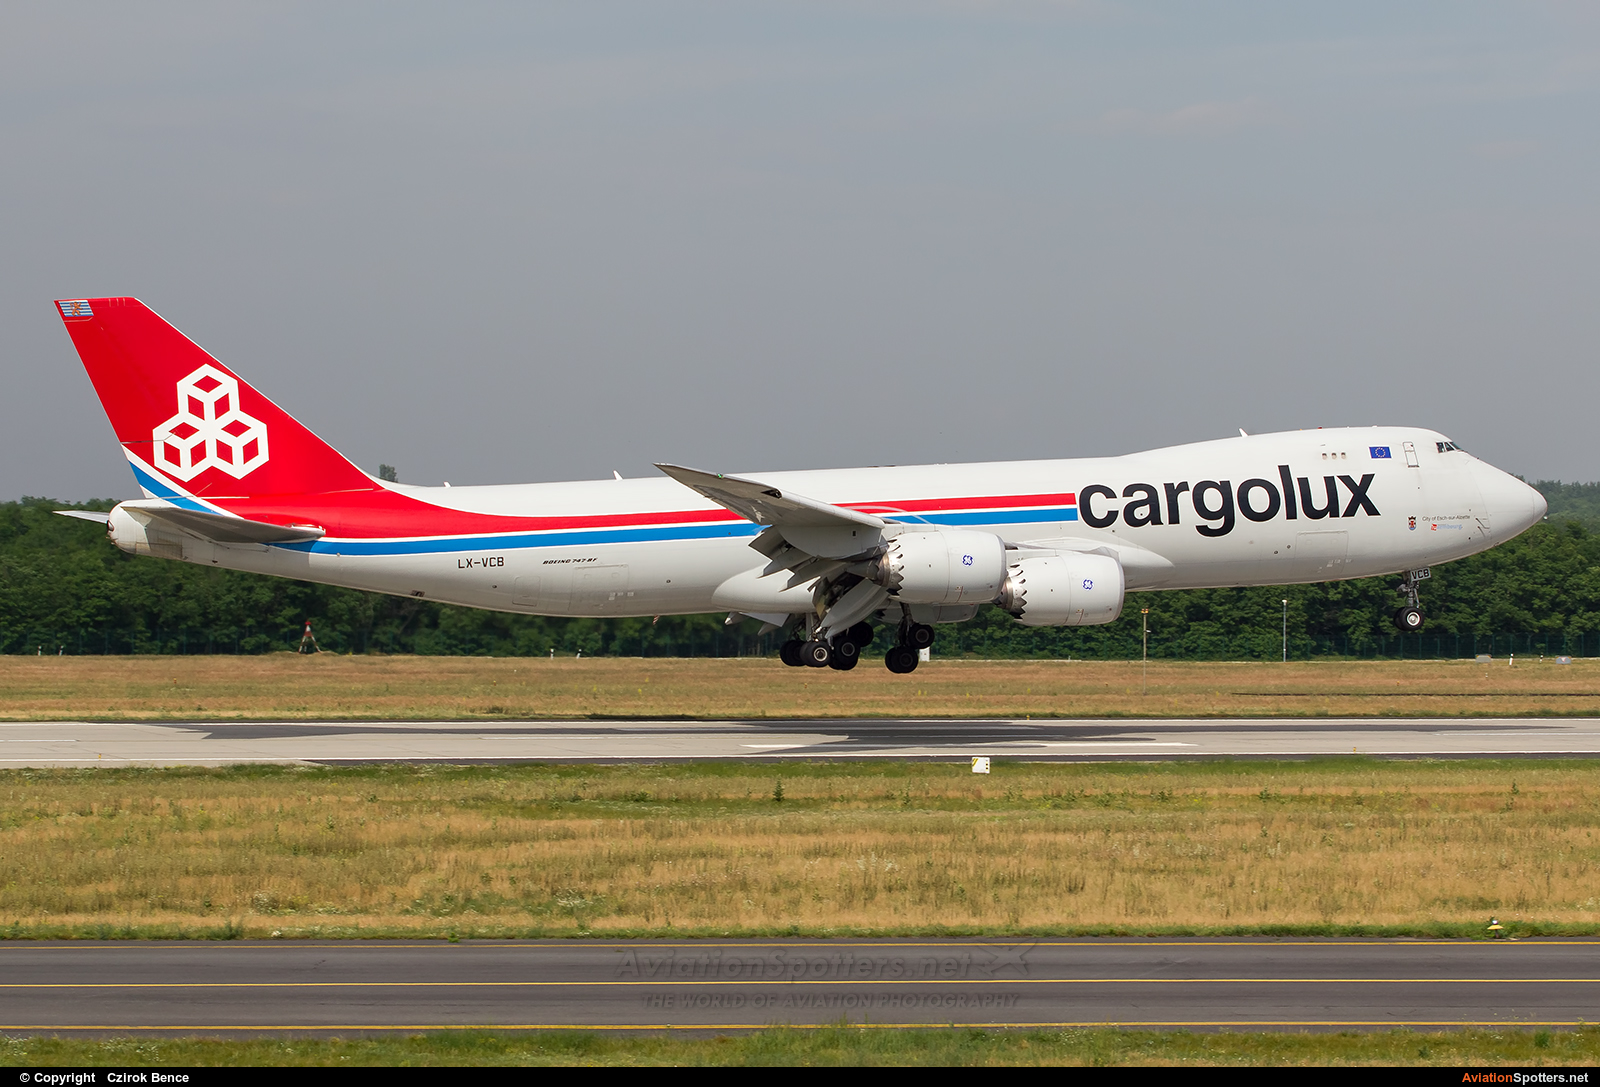 Cargolux  -  747-8F  (LX-VCB) By Czirok Bence (Orosmet)